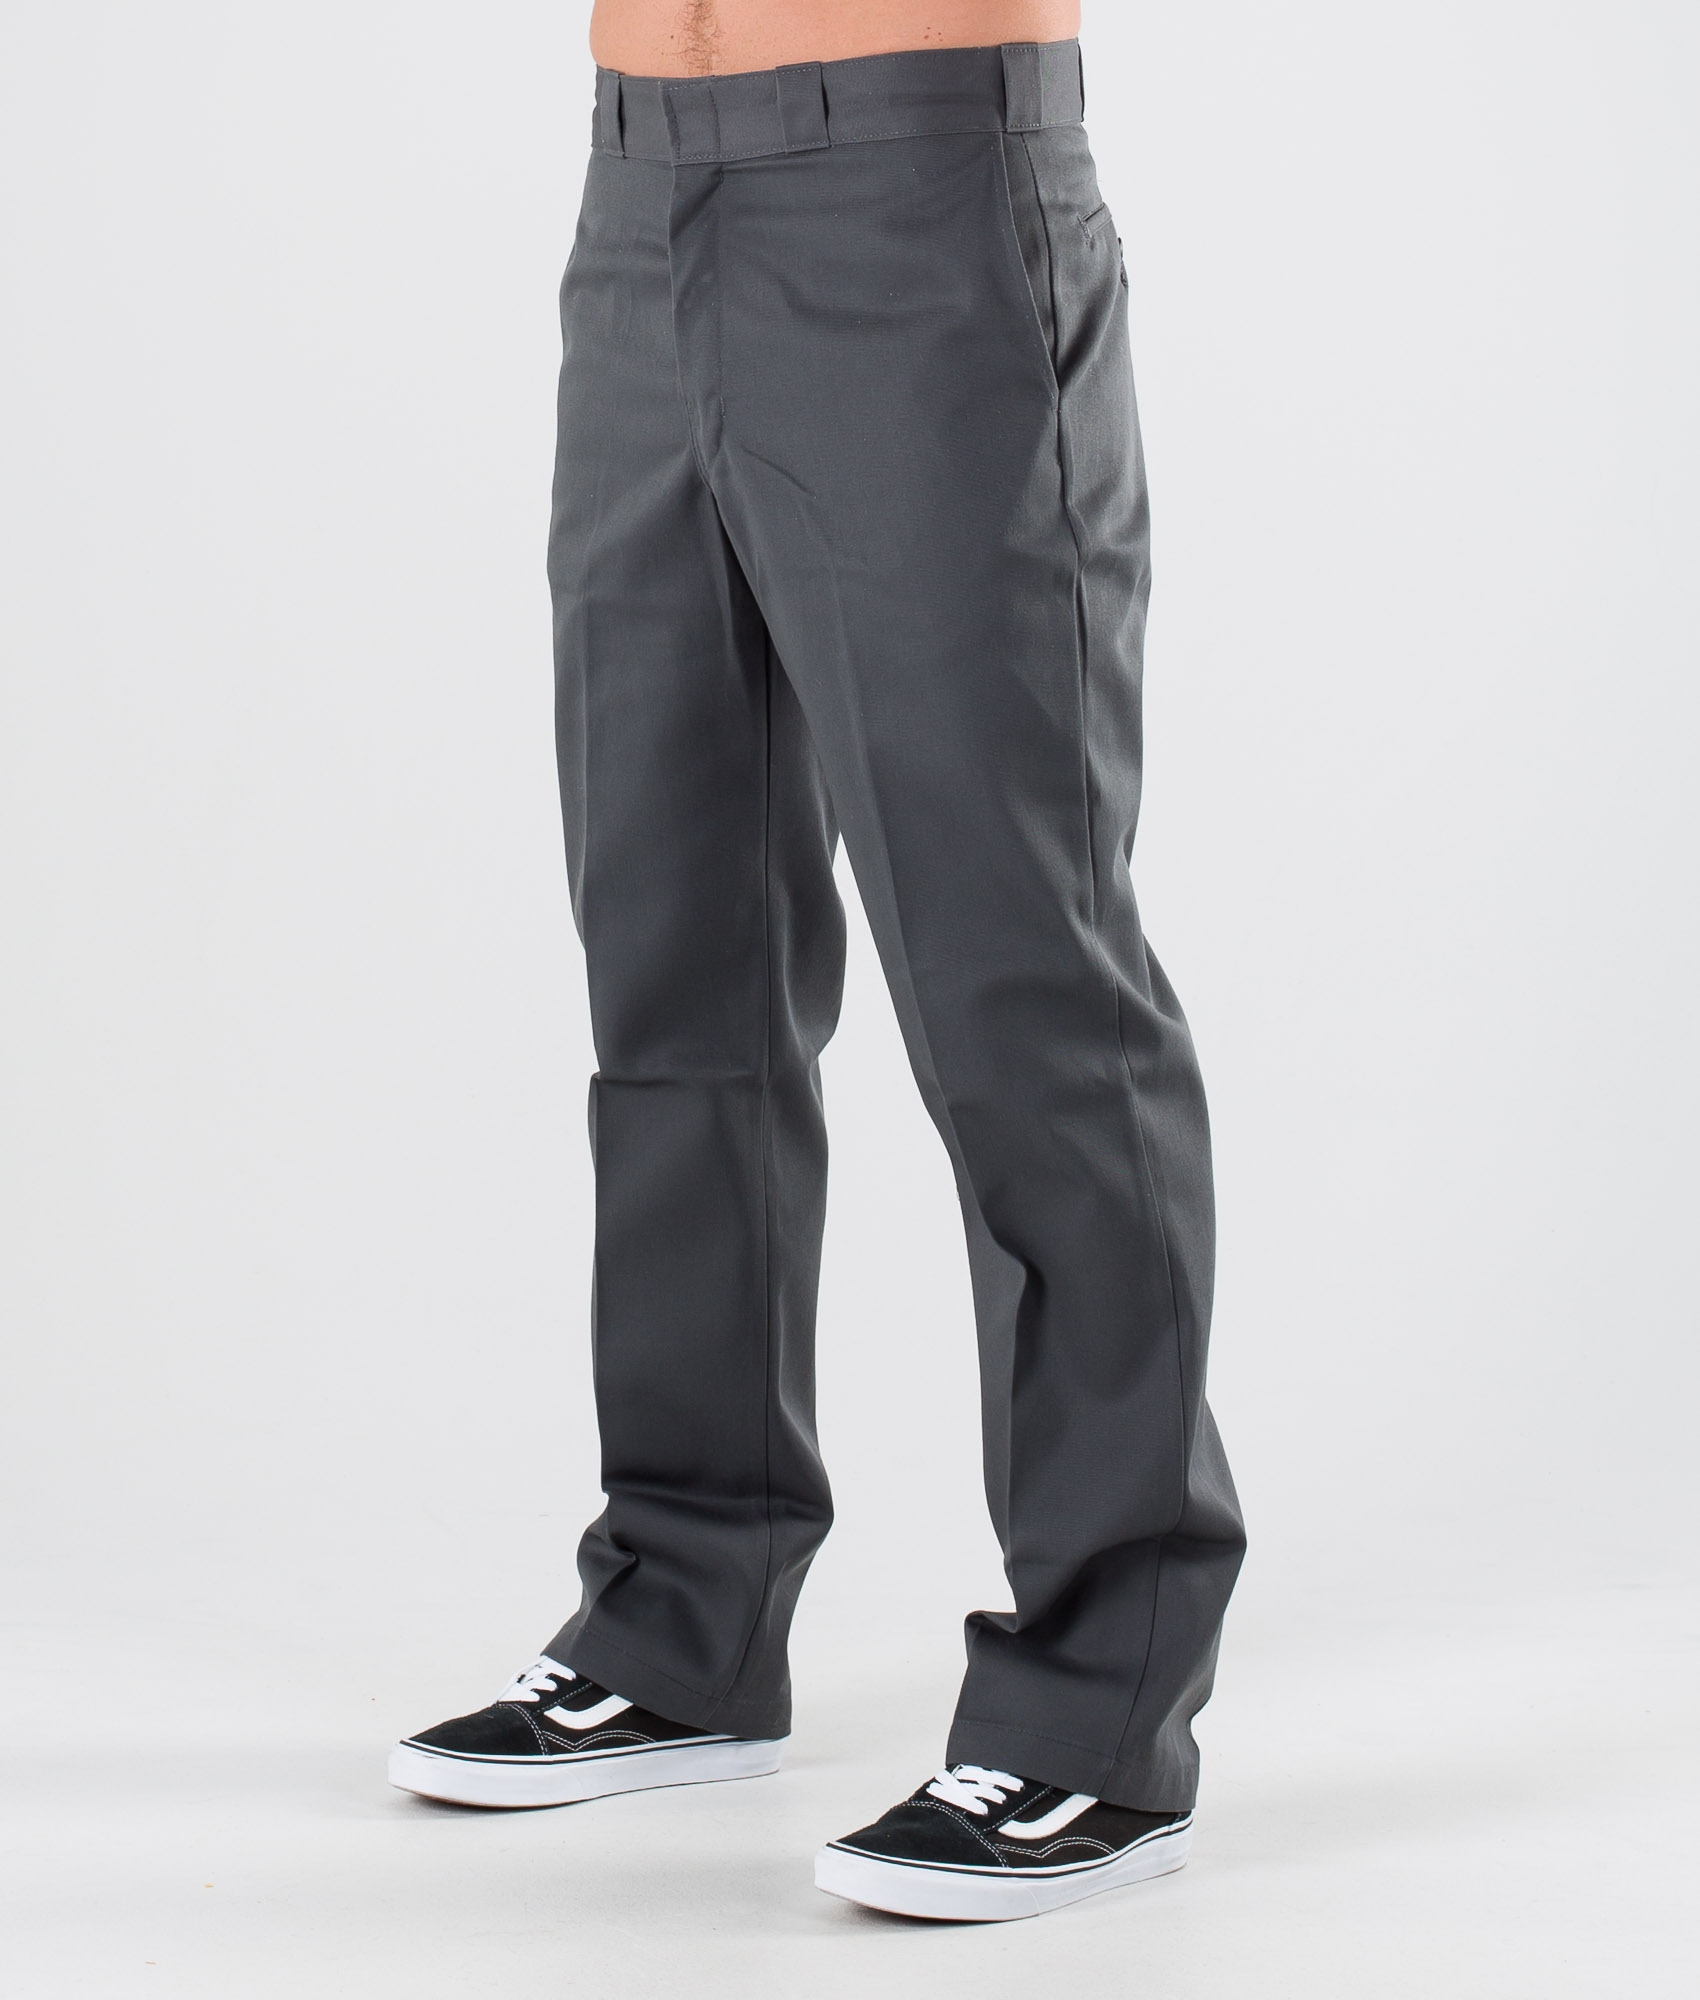 Original 874® Work Pants, Charcoal Gray